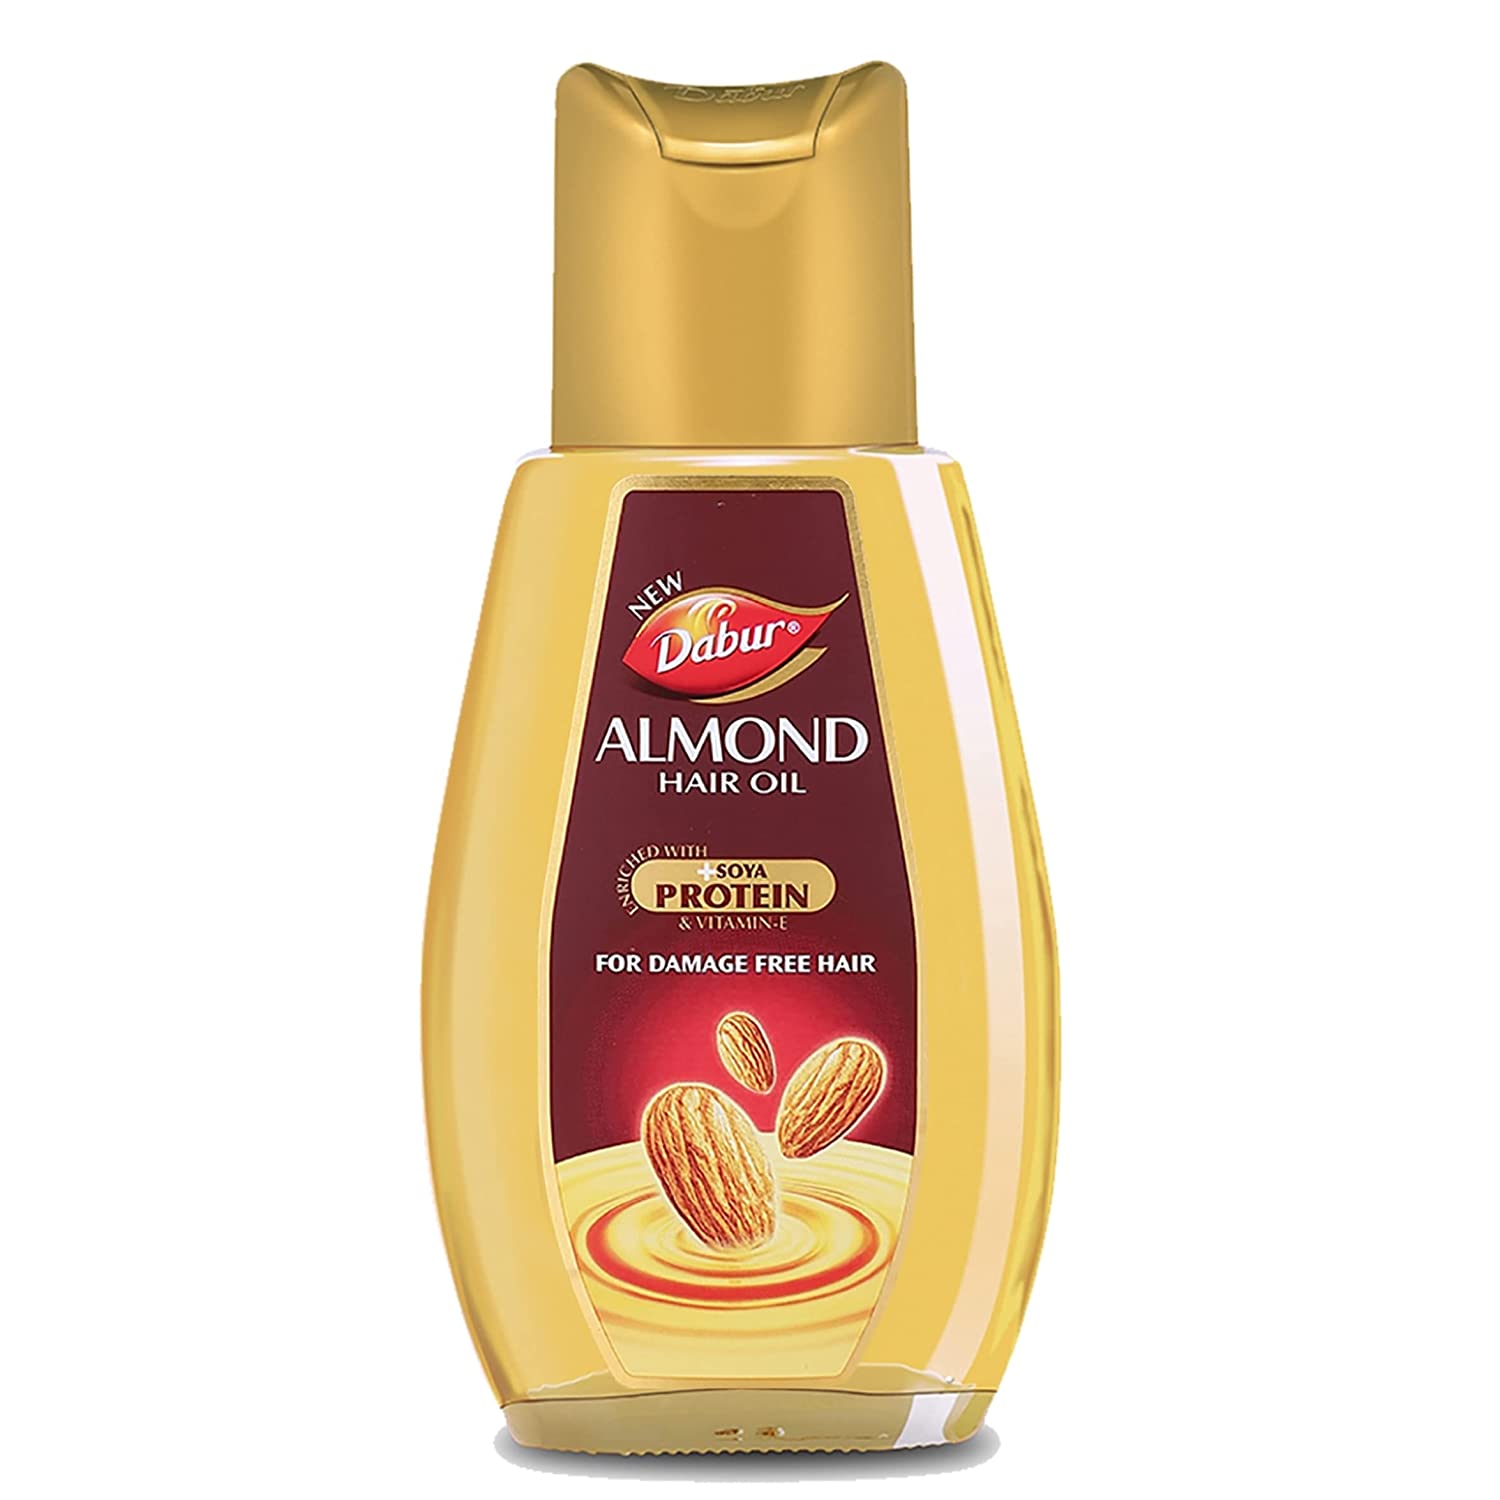 Dabur Almond Hair Oil - with Almond, Vitamin E and Soya Protein - 500ml,Dabur Almond Hair Oil 